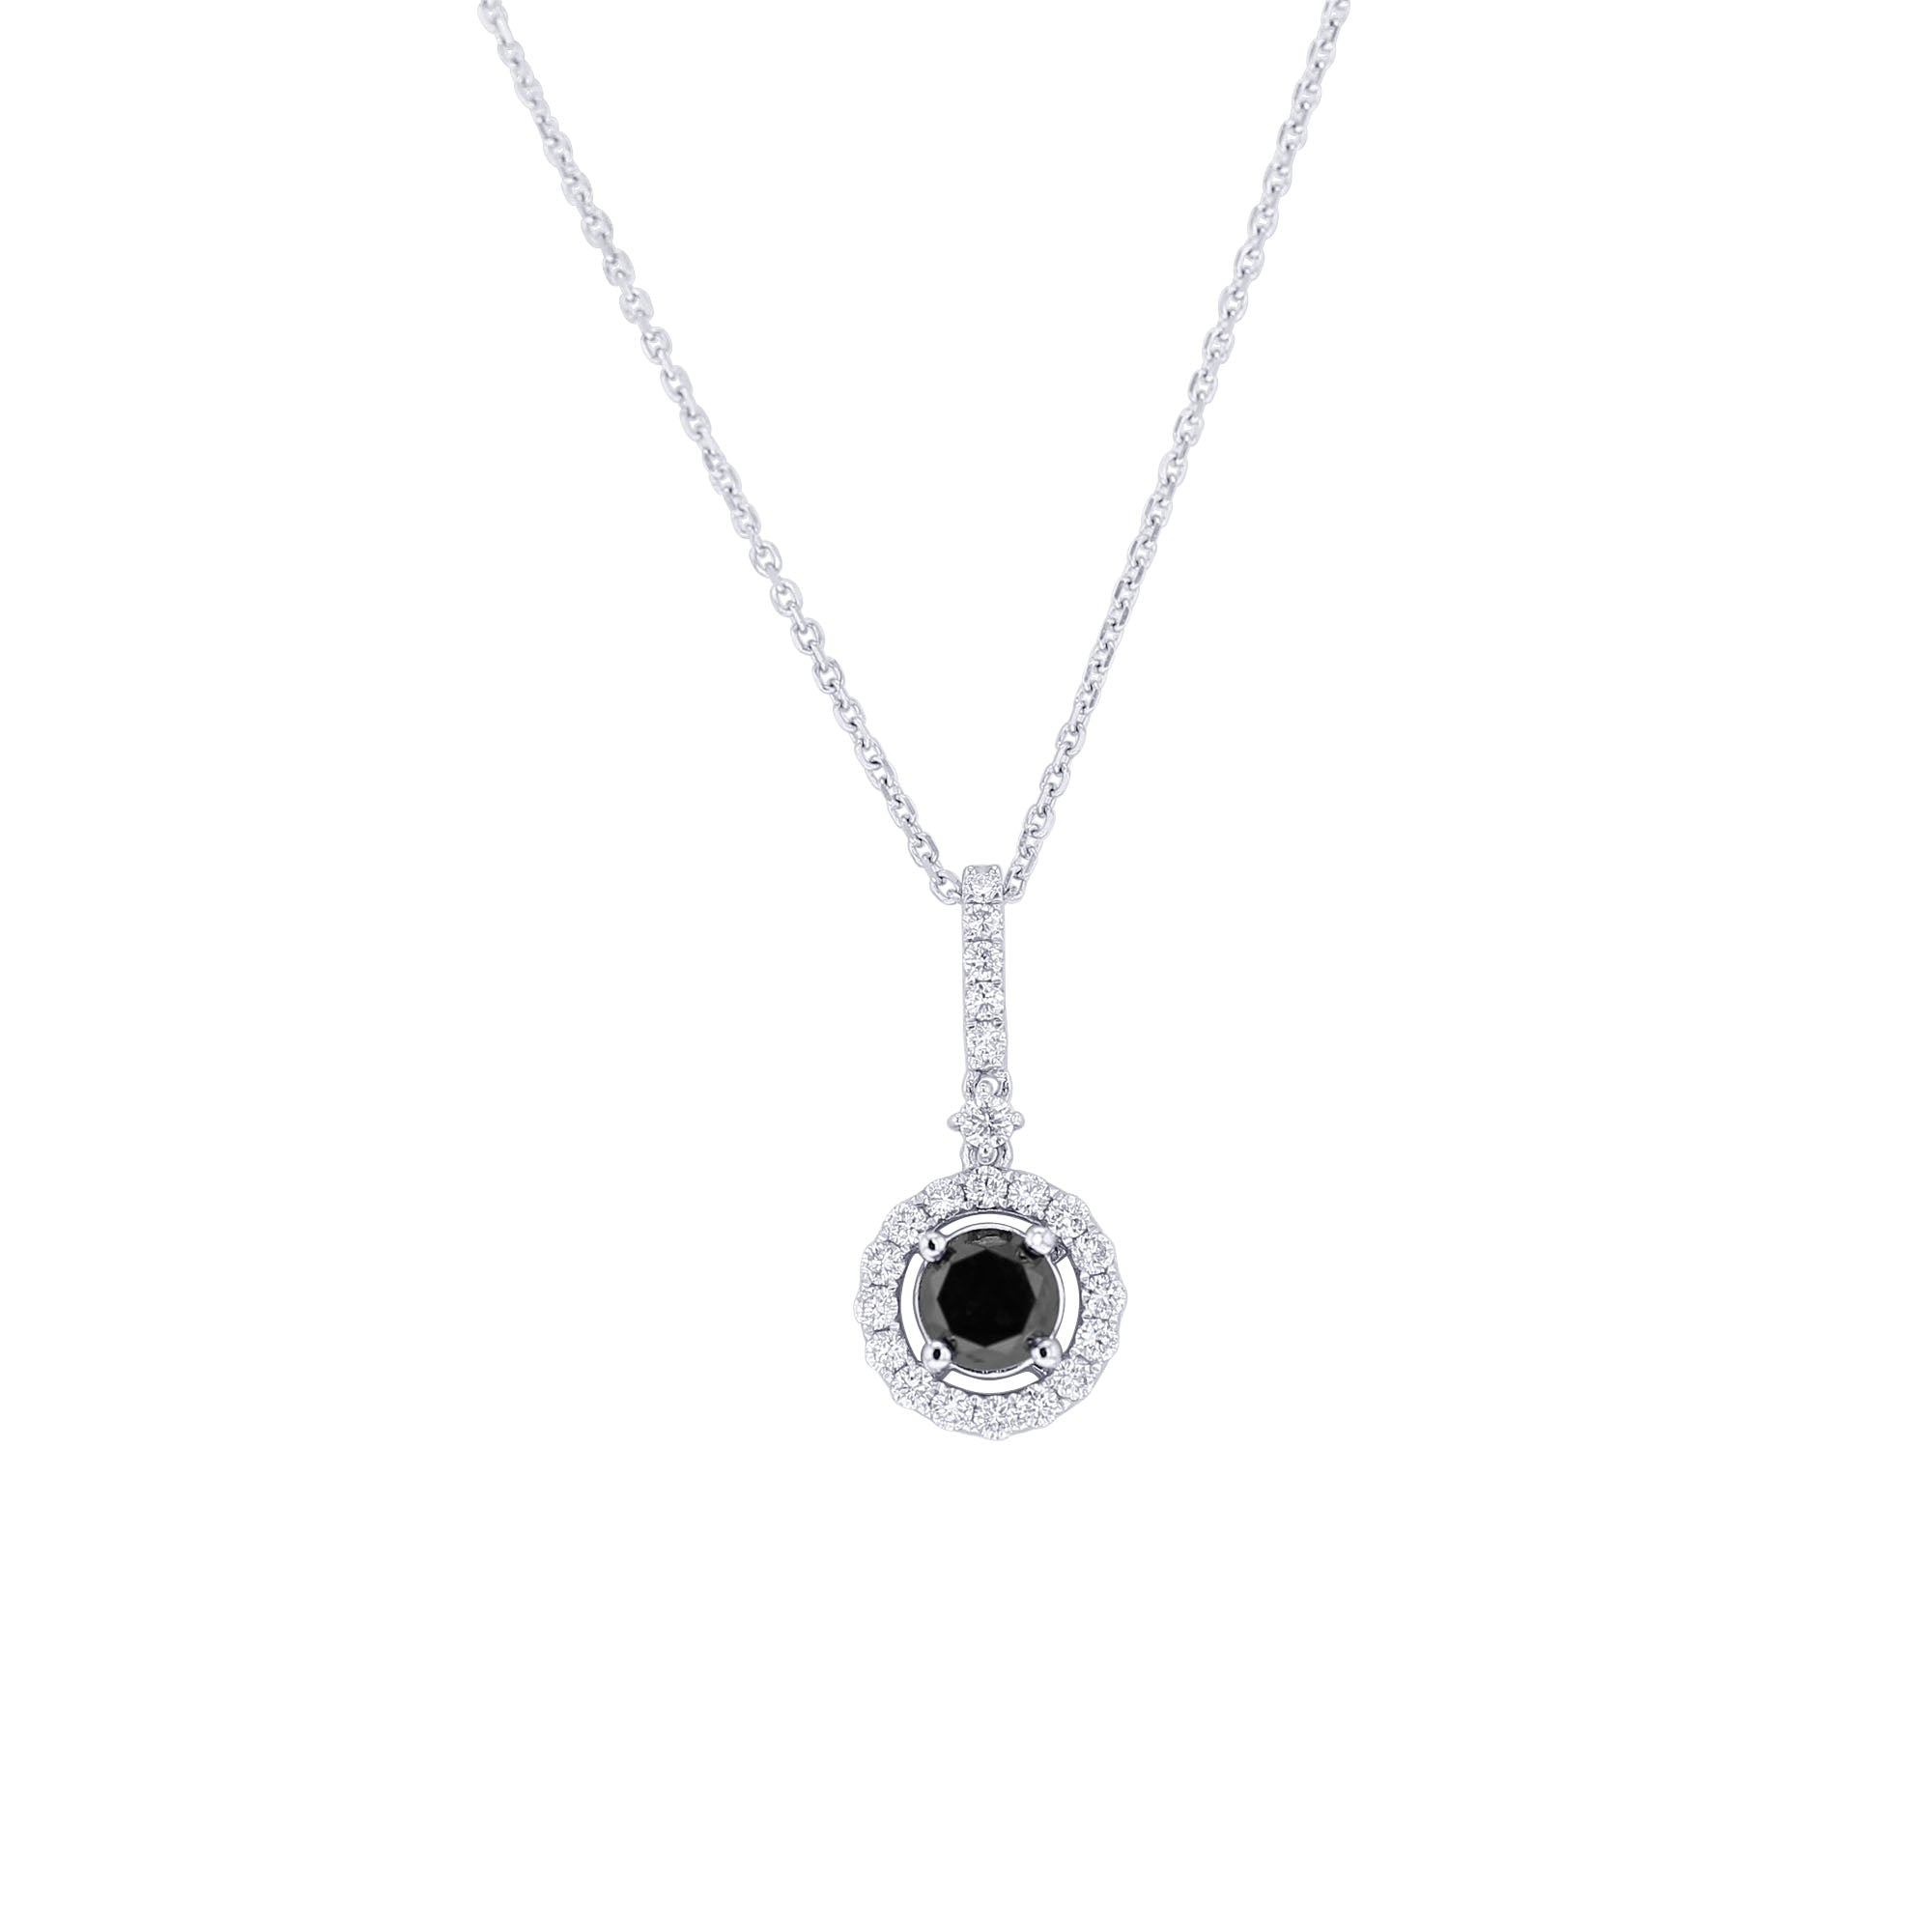 Enid Black and White Halo Diamond Necklace